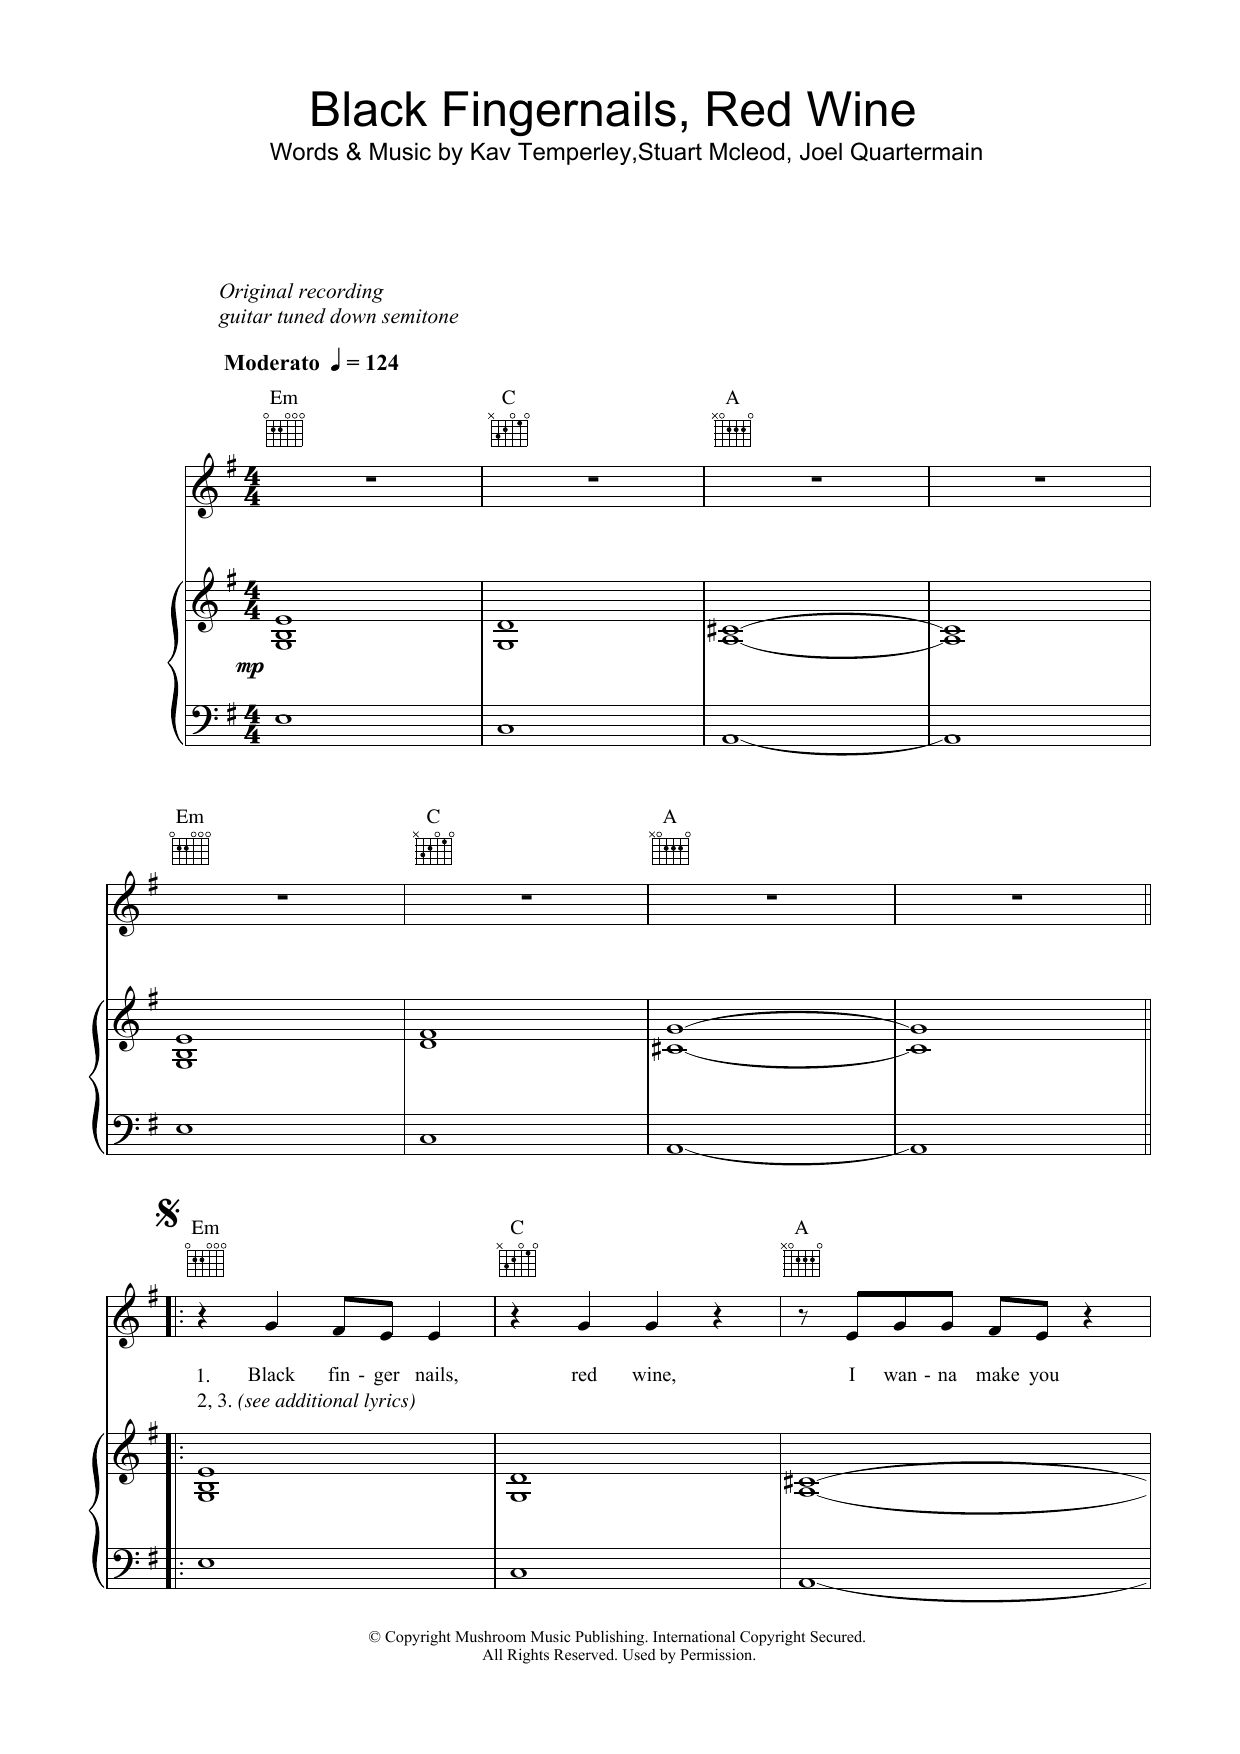 Eskimo Joe Black Fingernails, Red Wine Sheet Music Notes & Chords for Piano, Vocal & Guitar - Download or Print PDF